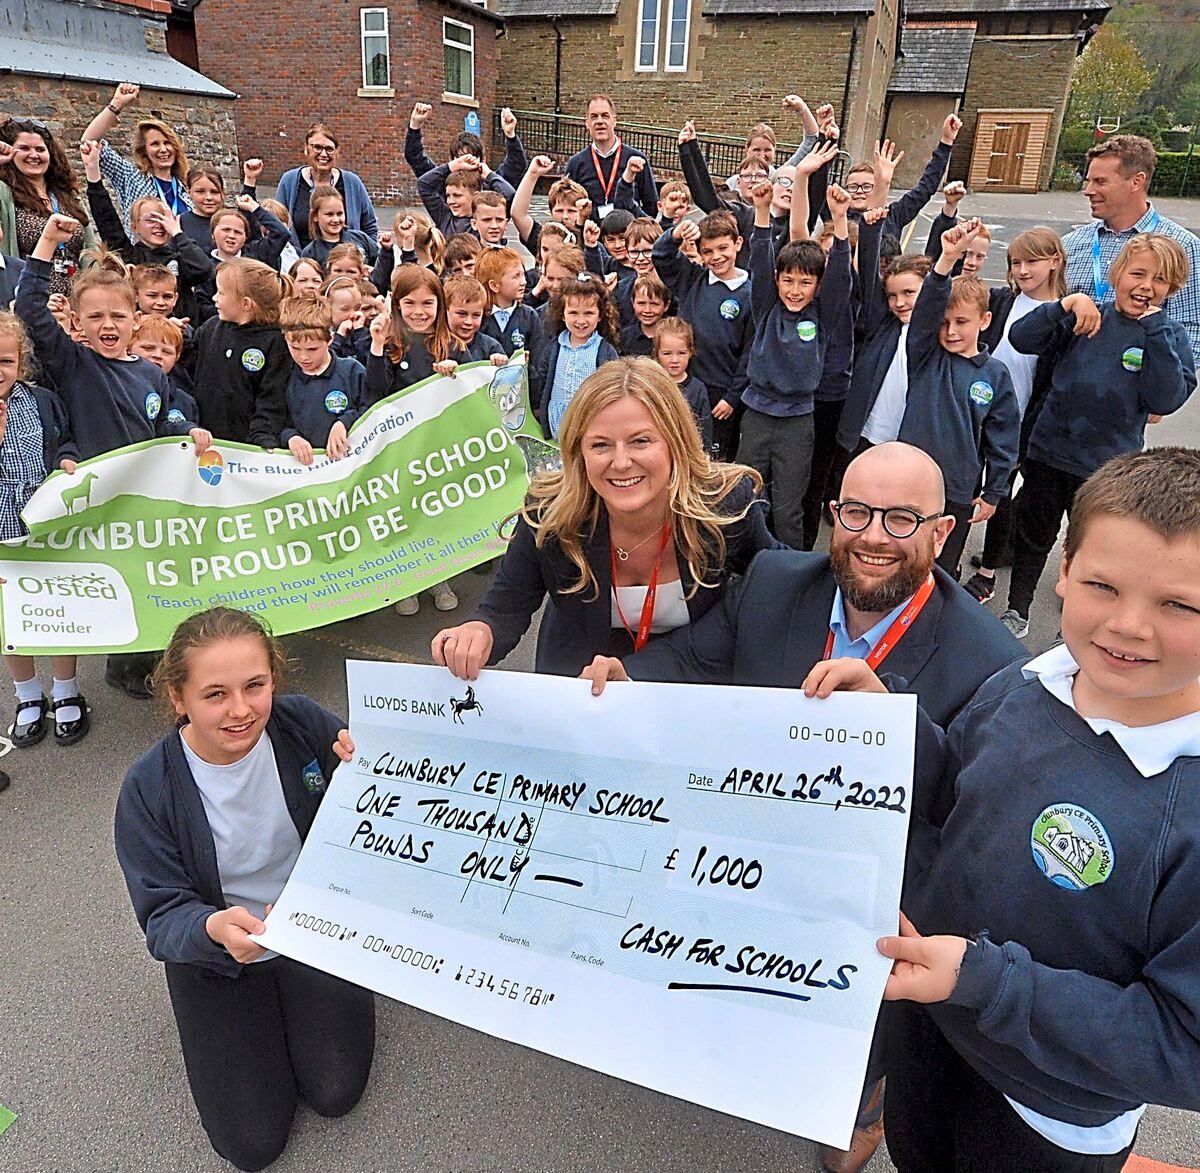 £1,000 – Clunbury CE Primary School